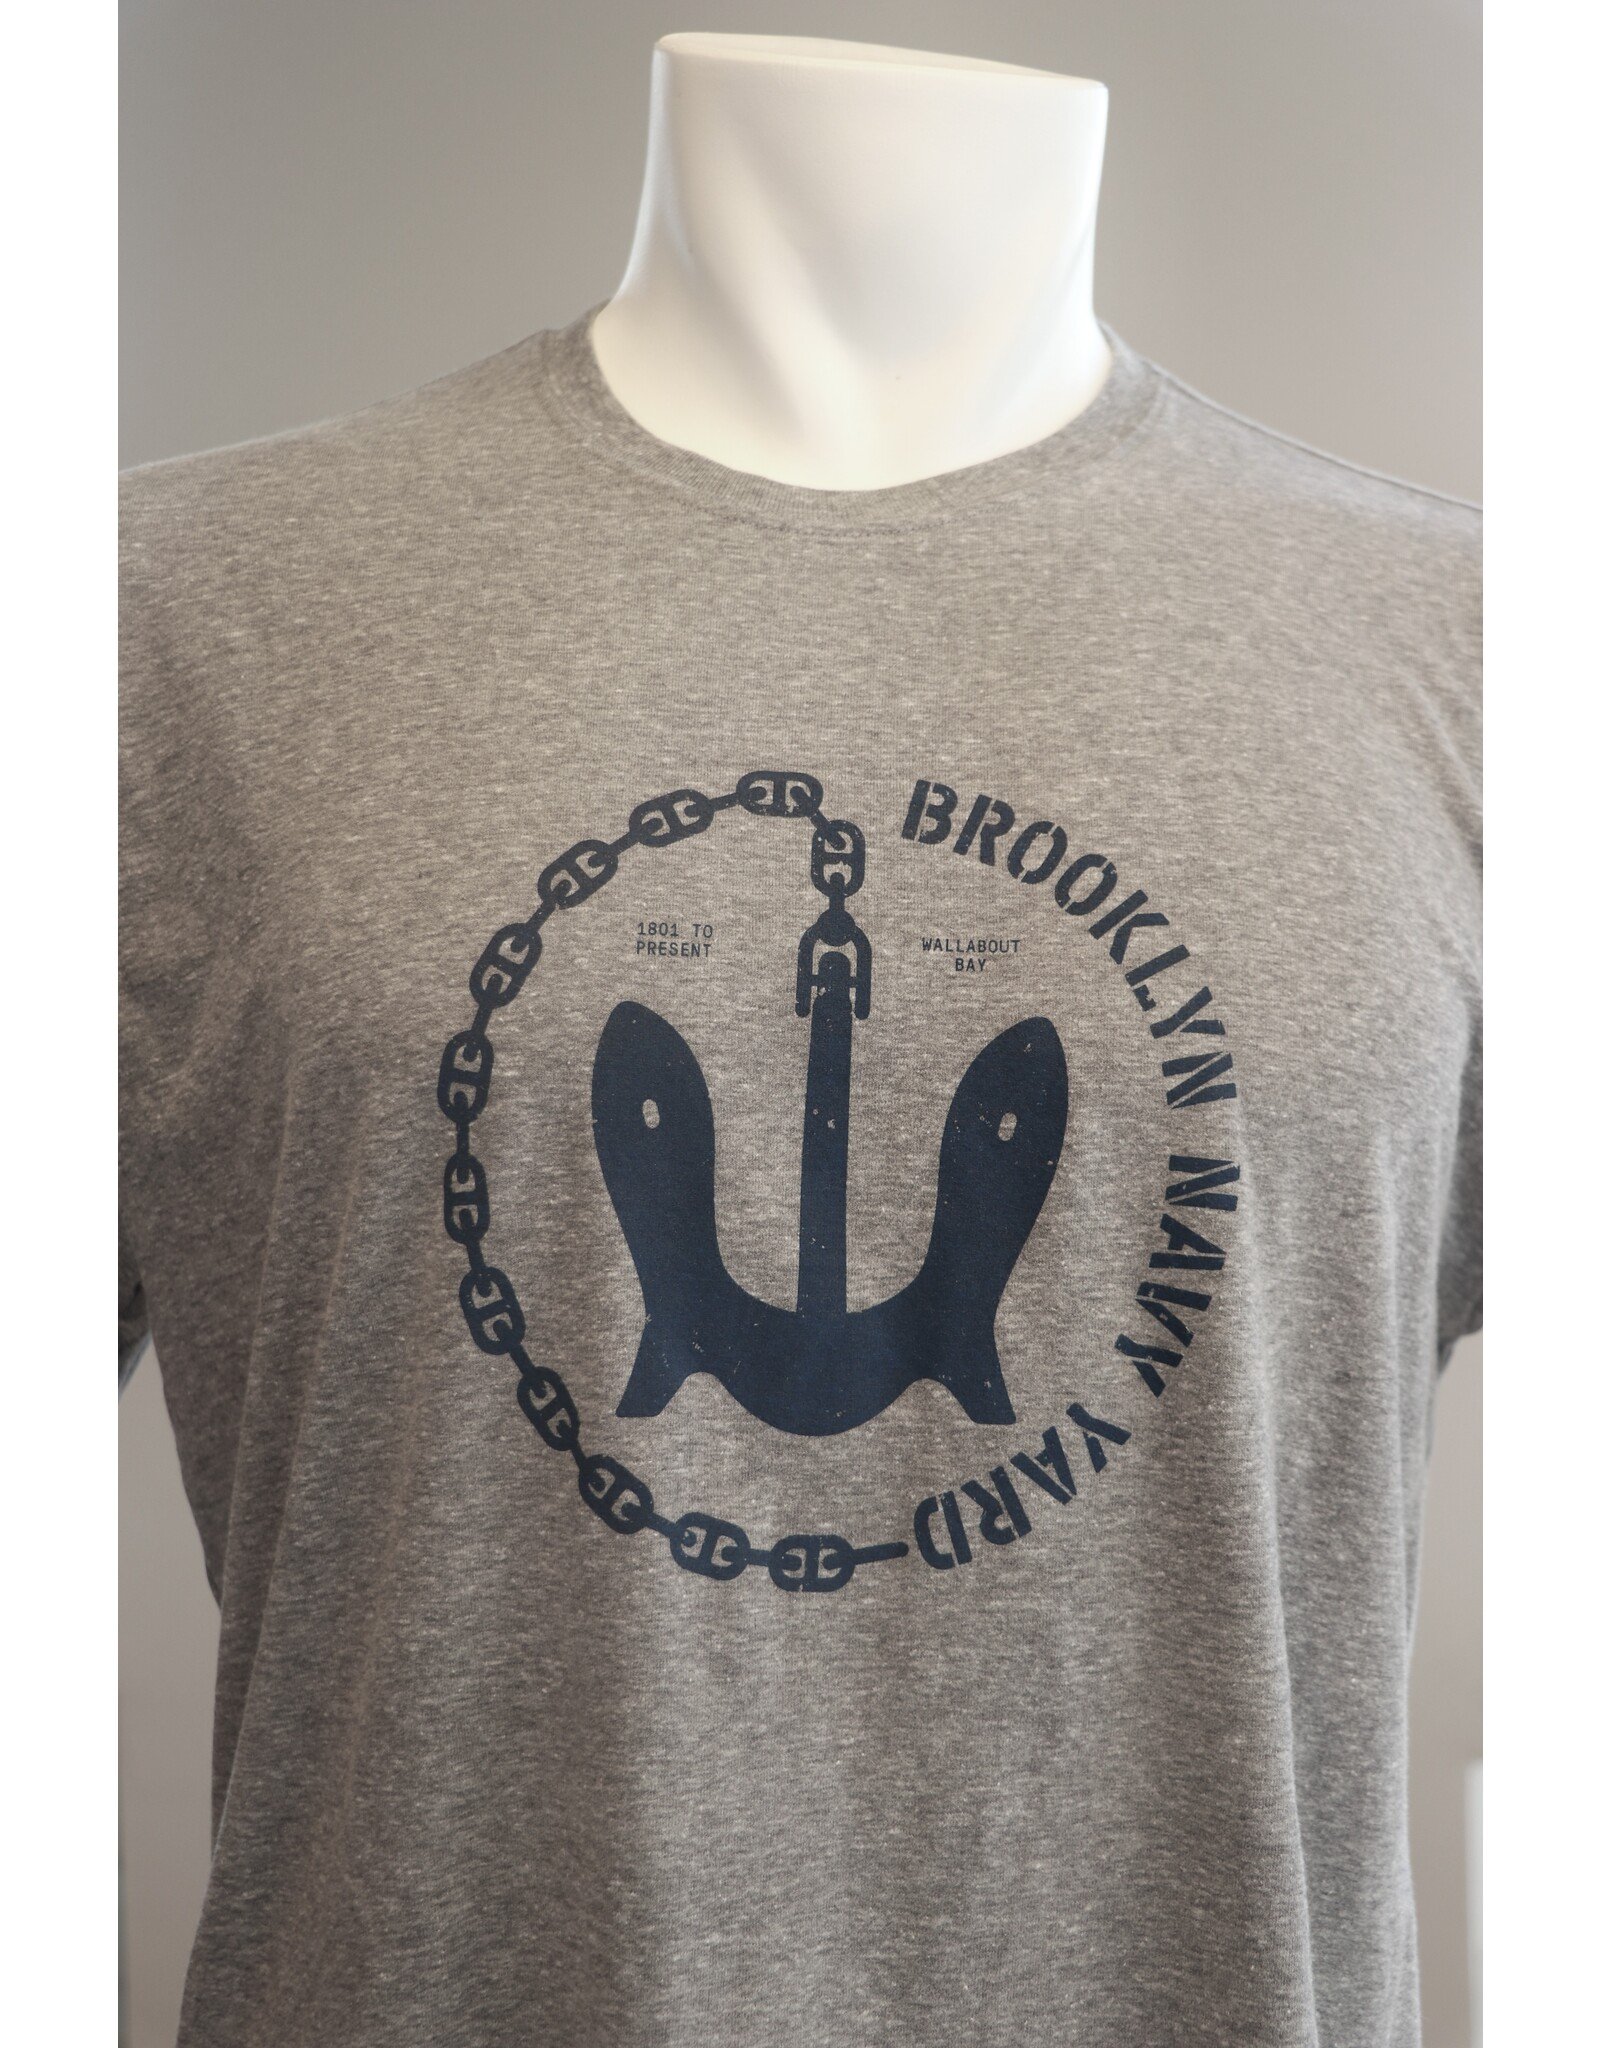 BNY Merchandise BNY Anchor Shirt